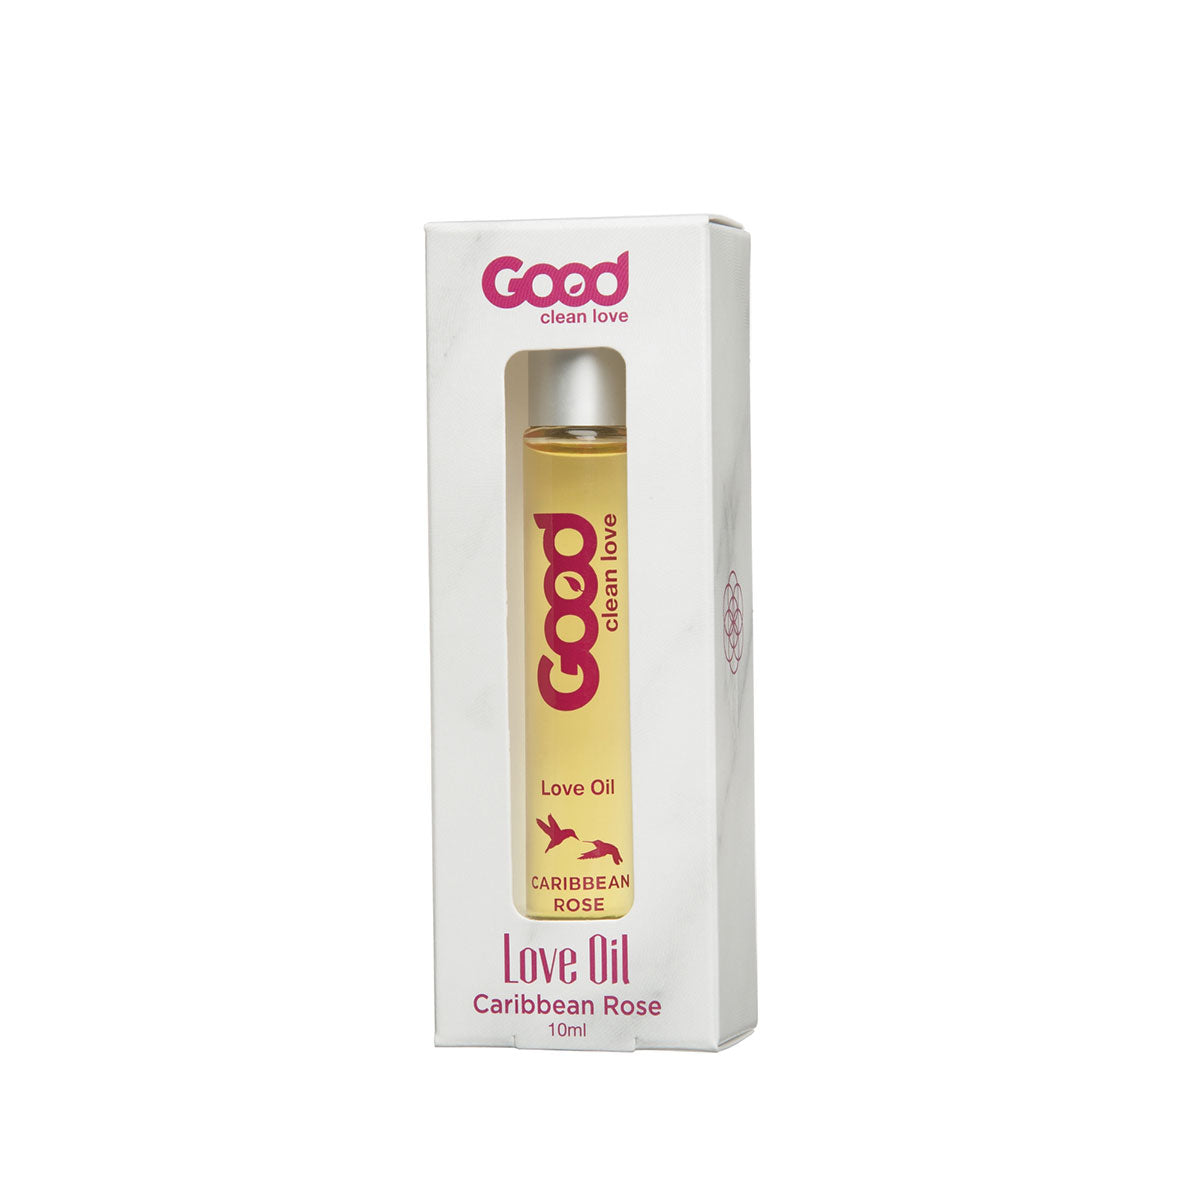 Good Clean Love Oil 10ml - Caribbean Rose [87010]